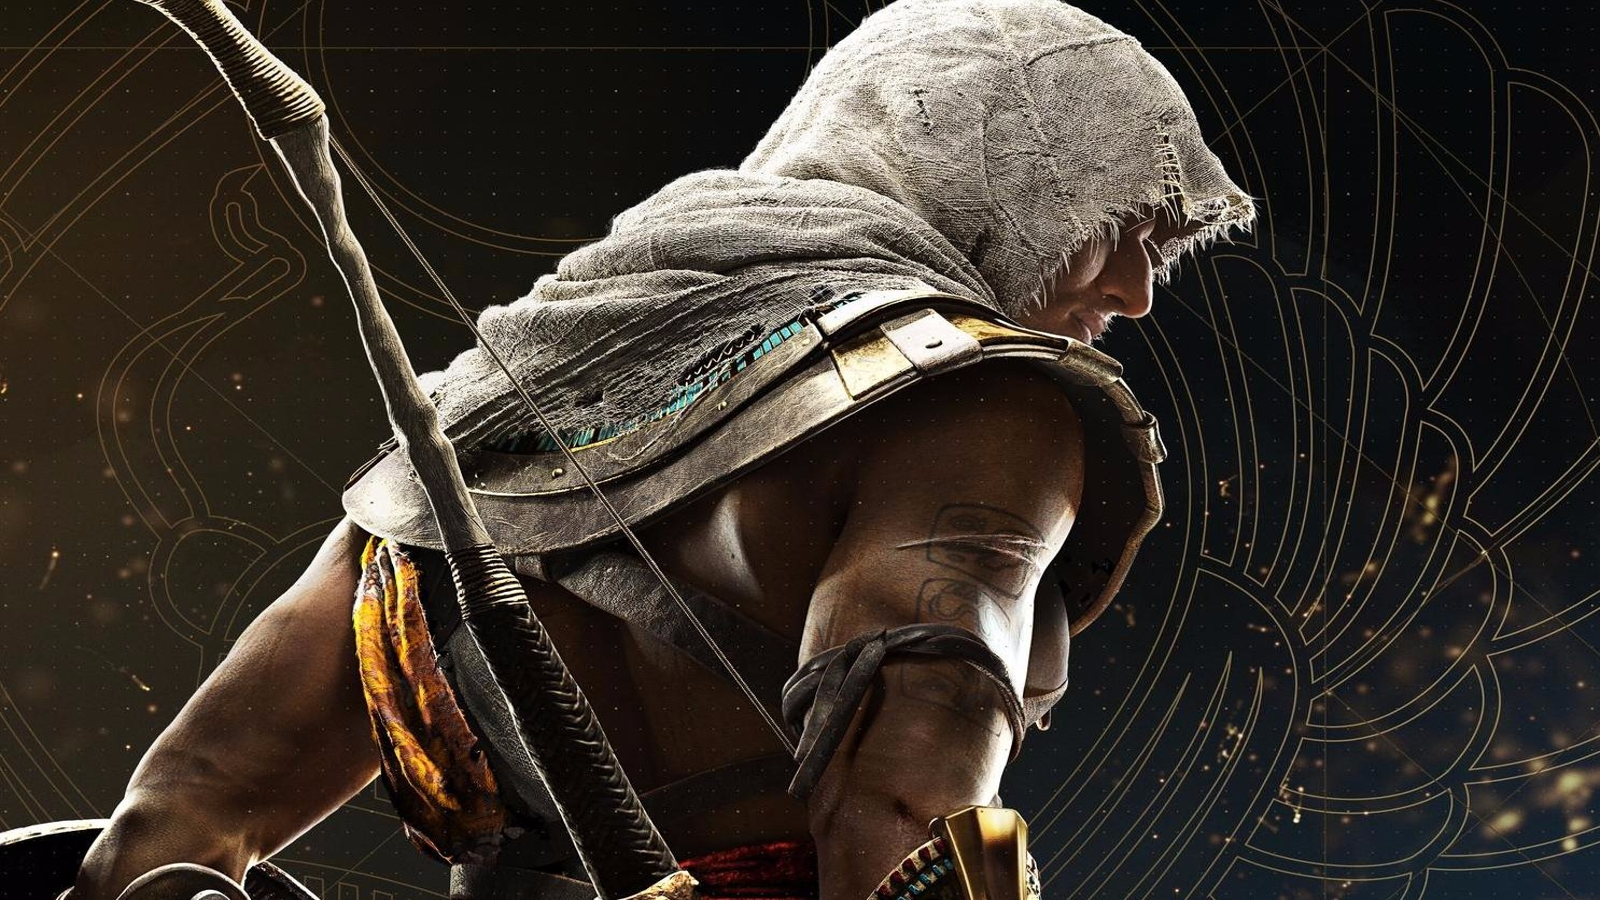 Buy Assassin's Creed® Origins